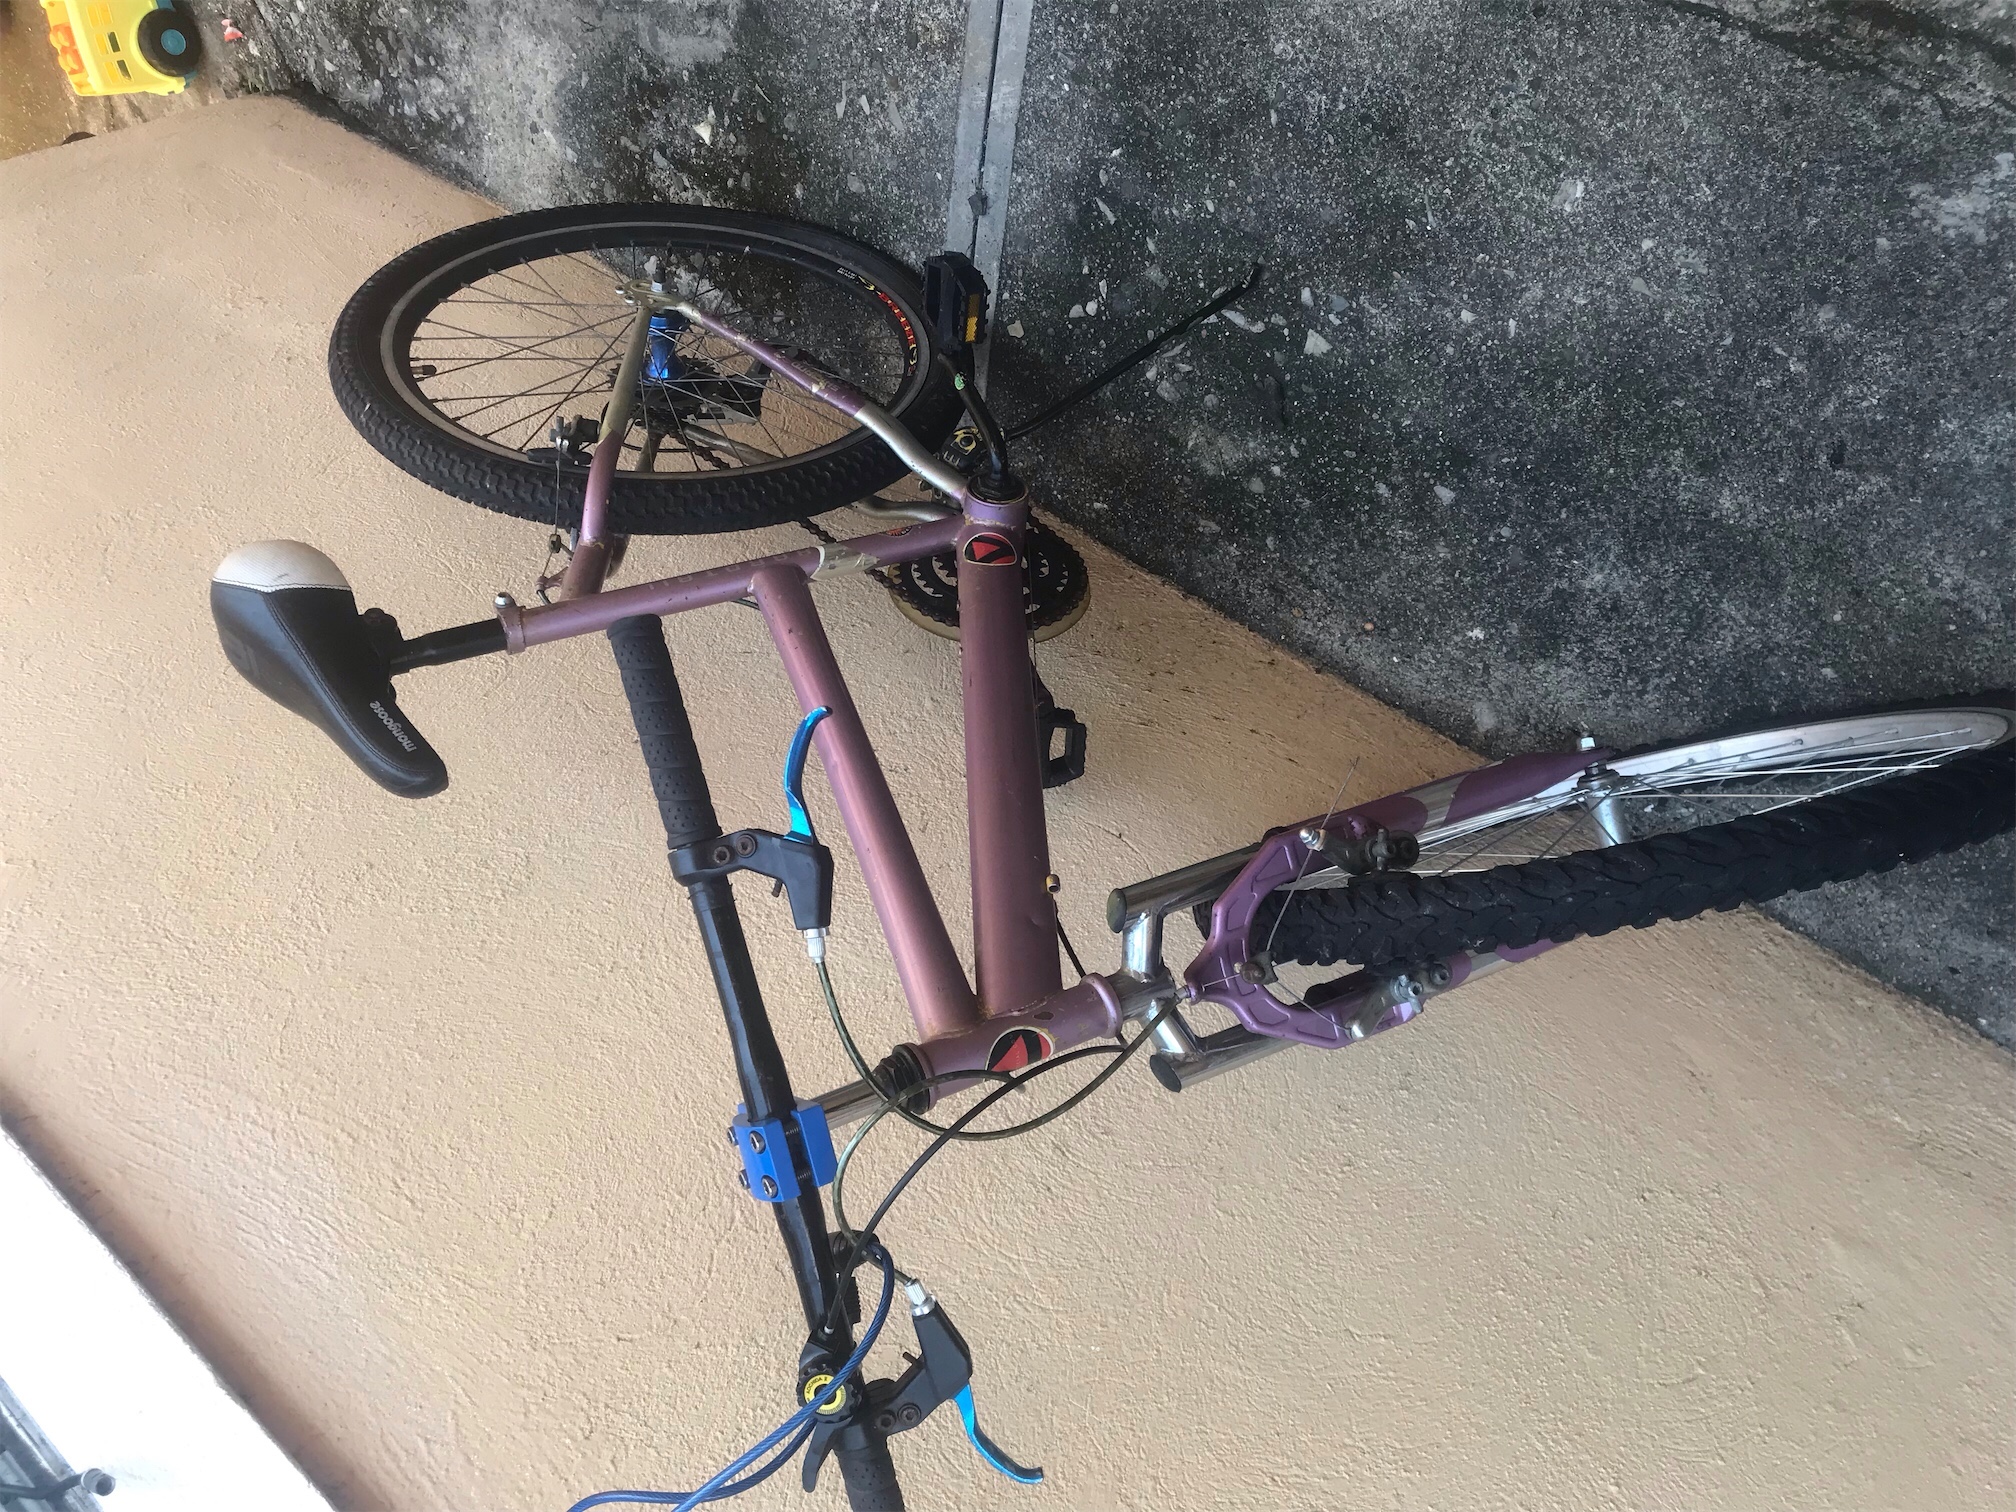 bicicletas y accesorios - Bicicleta usada aro 24 color morado